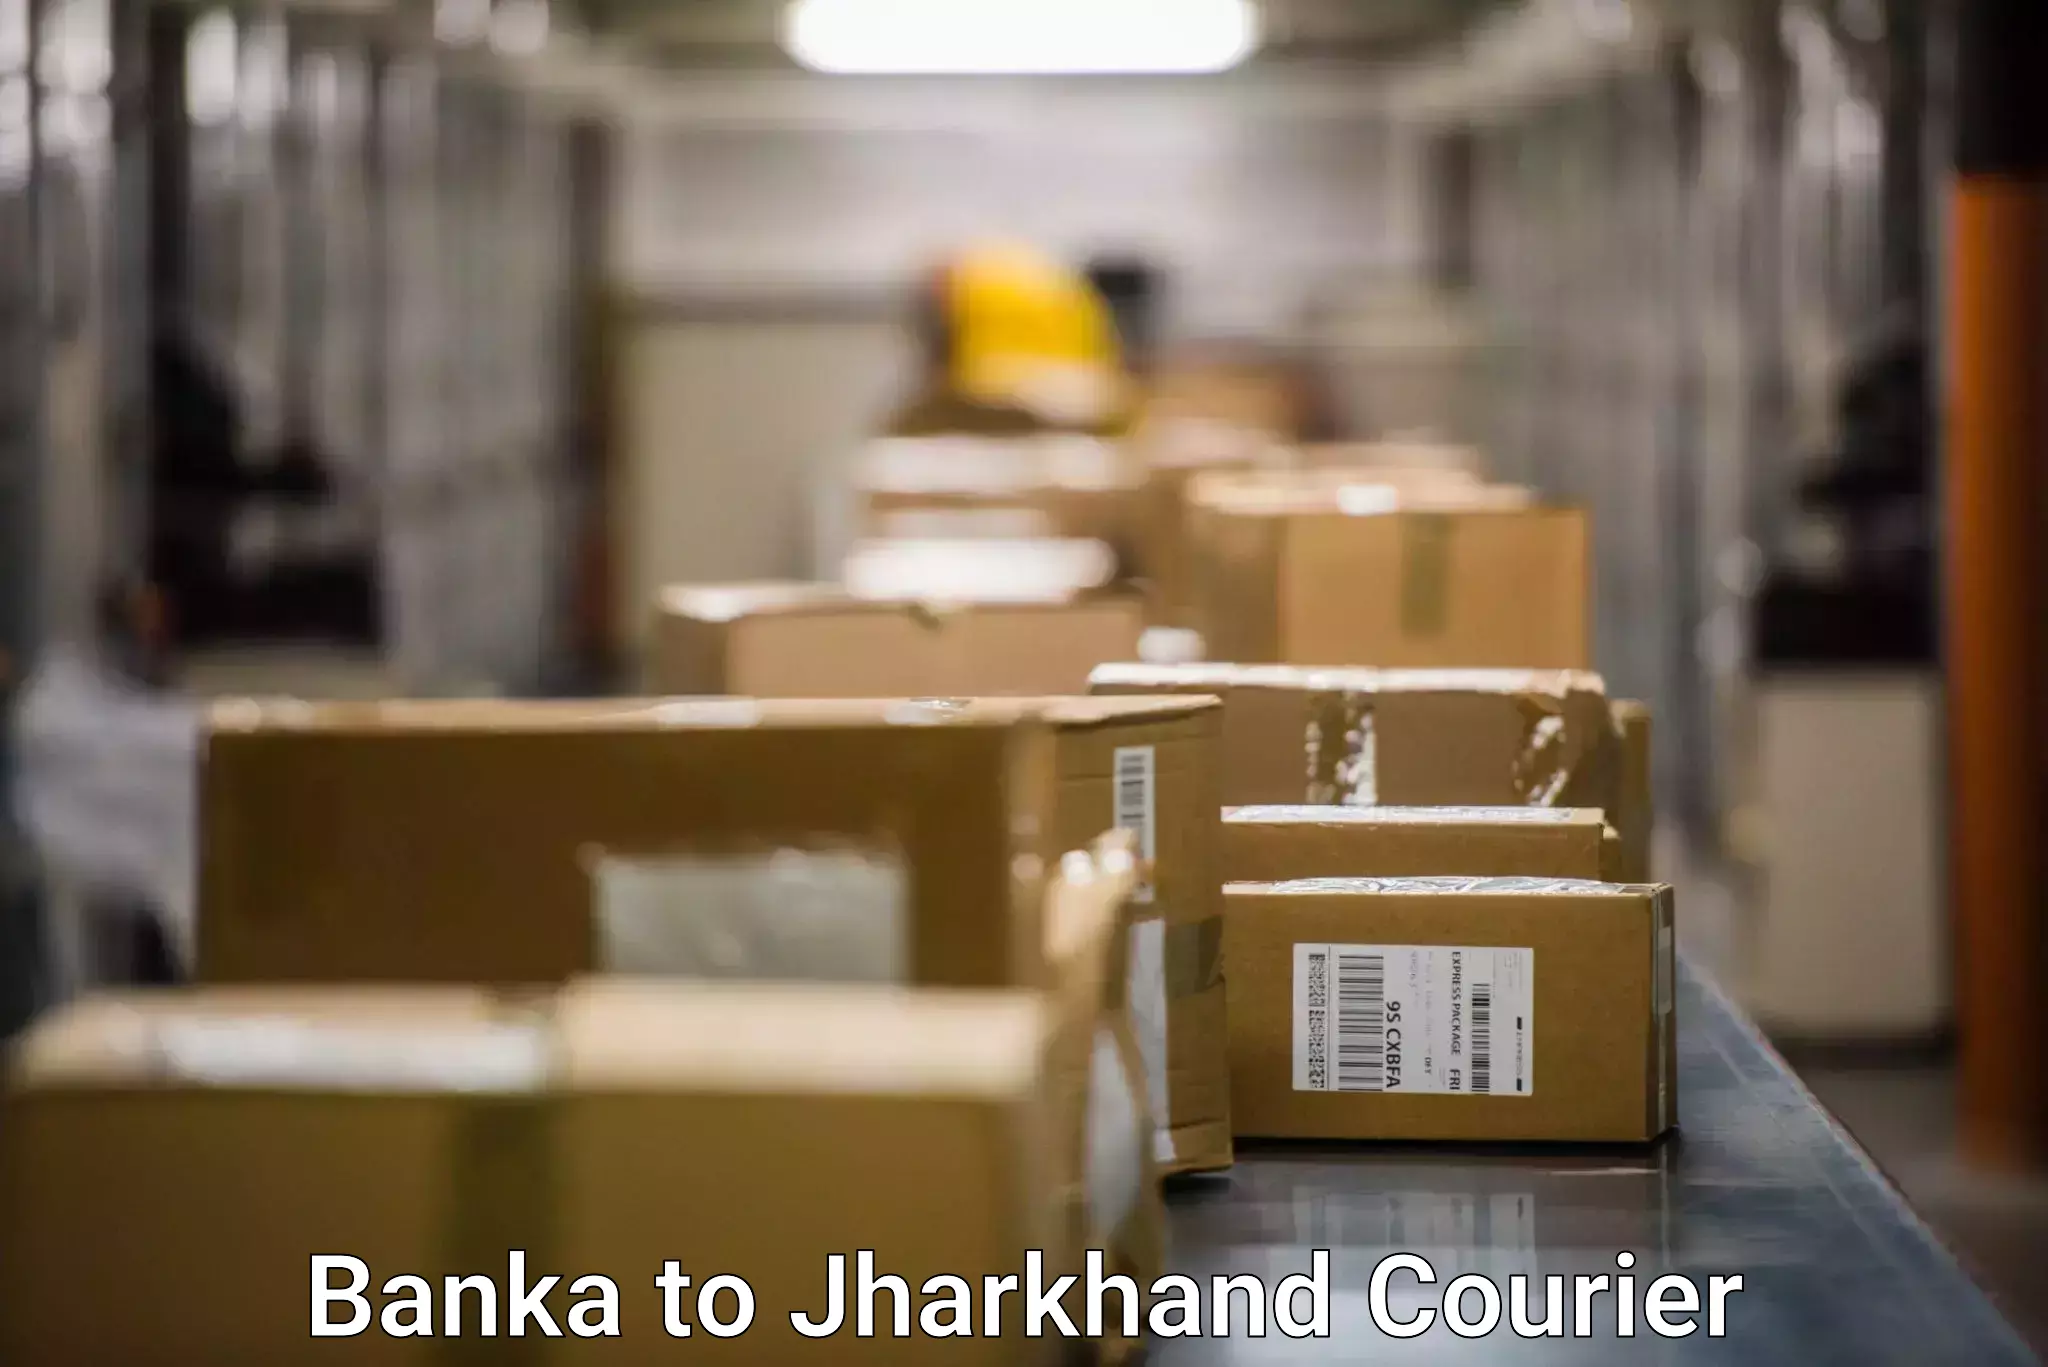 International parcel service Banka to Ranchi